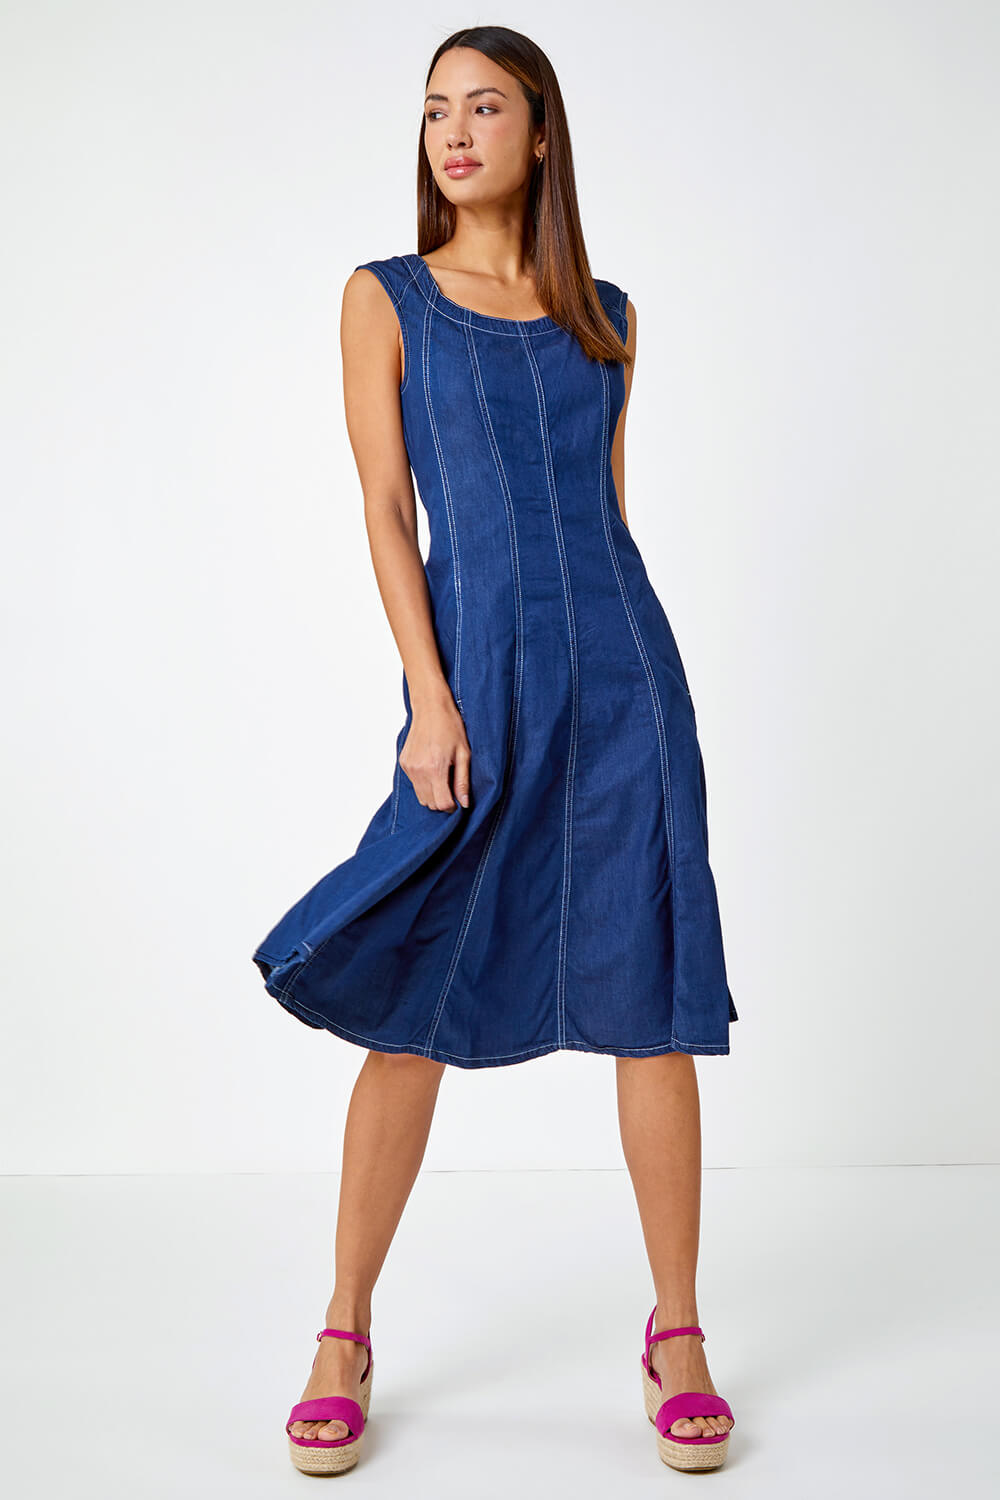 Studded Flounce Skirt Denim Dress | Denim dress, Flounce skirt, Stretch  denim fabric